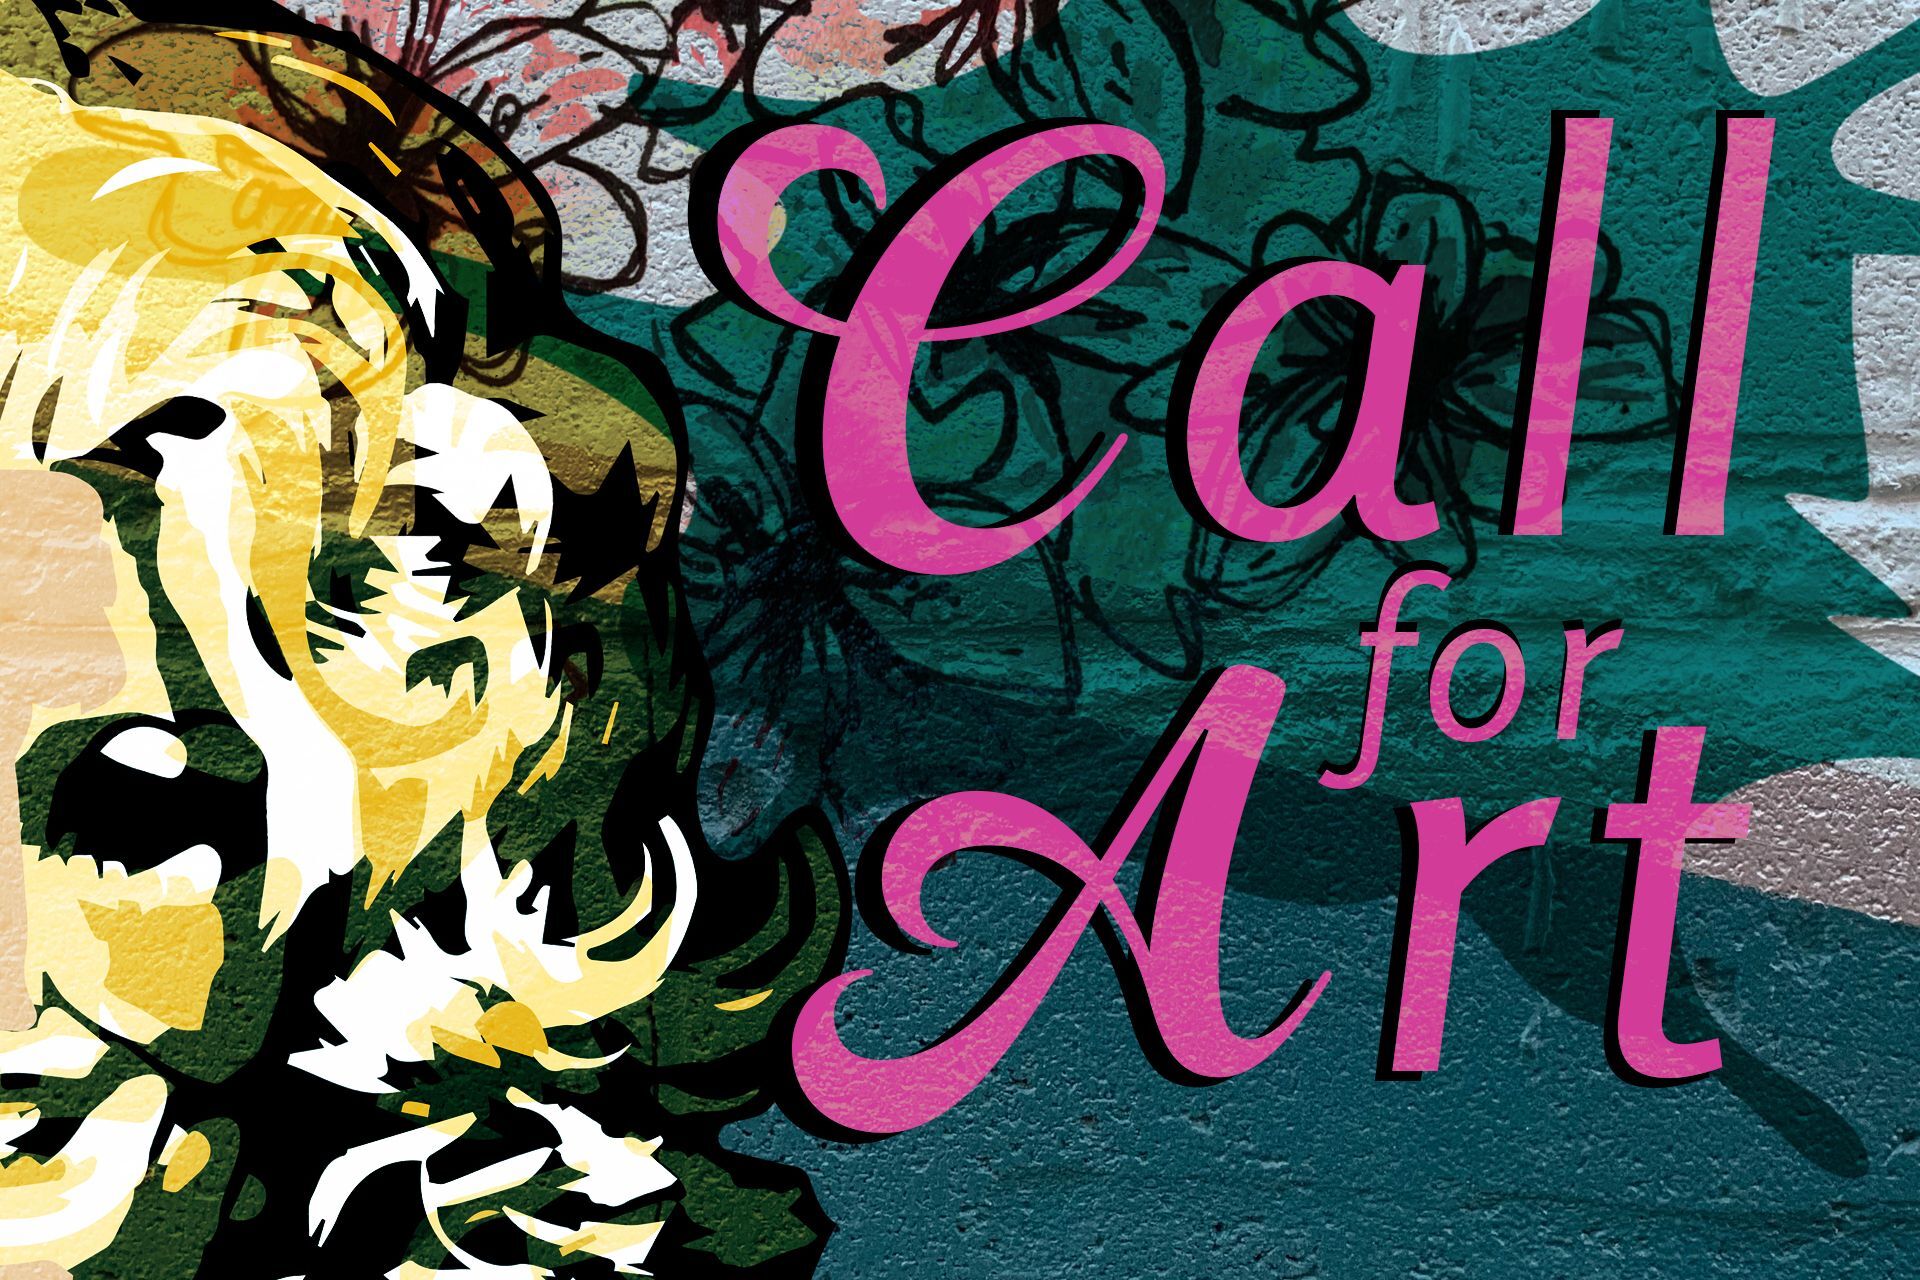 CALLS FOR ART